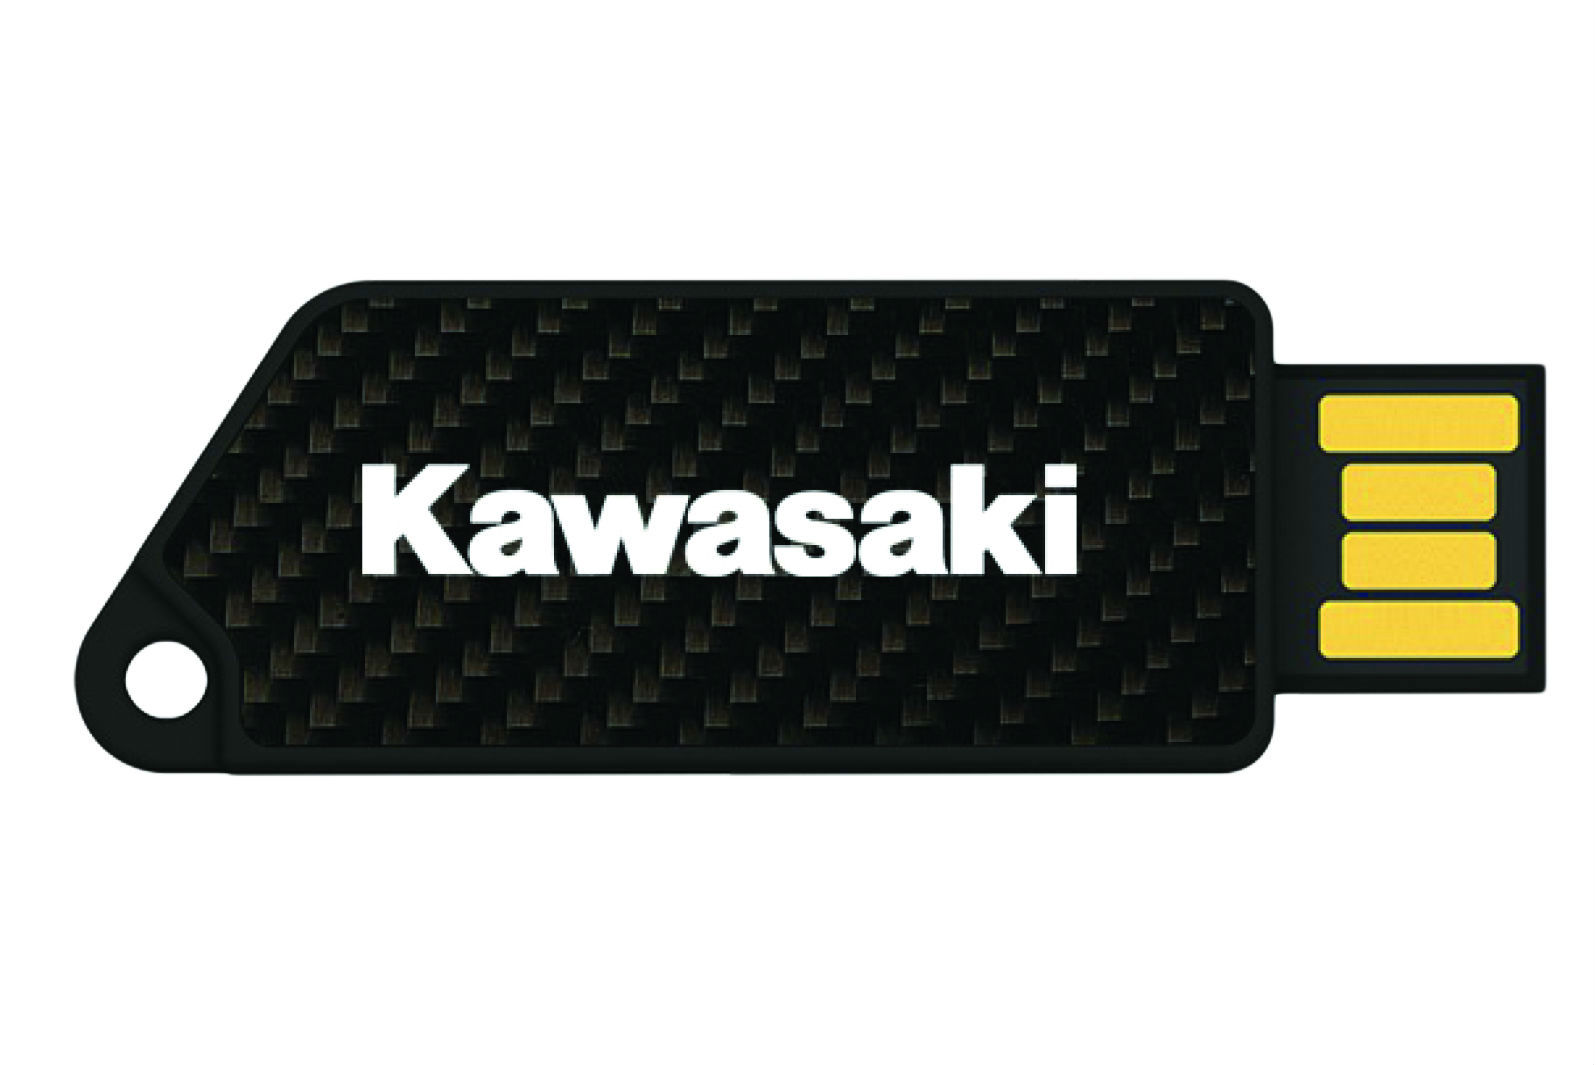 Kawasaki service history goes digital with new Digital Key